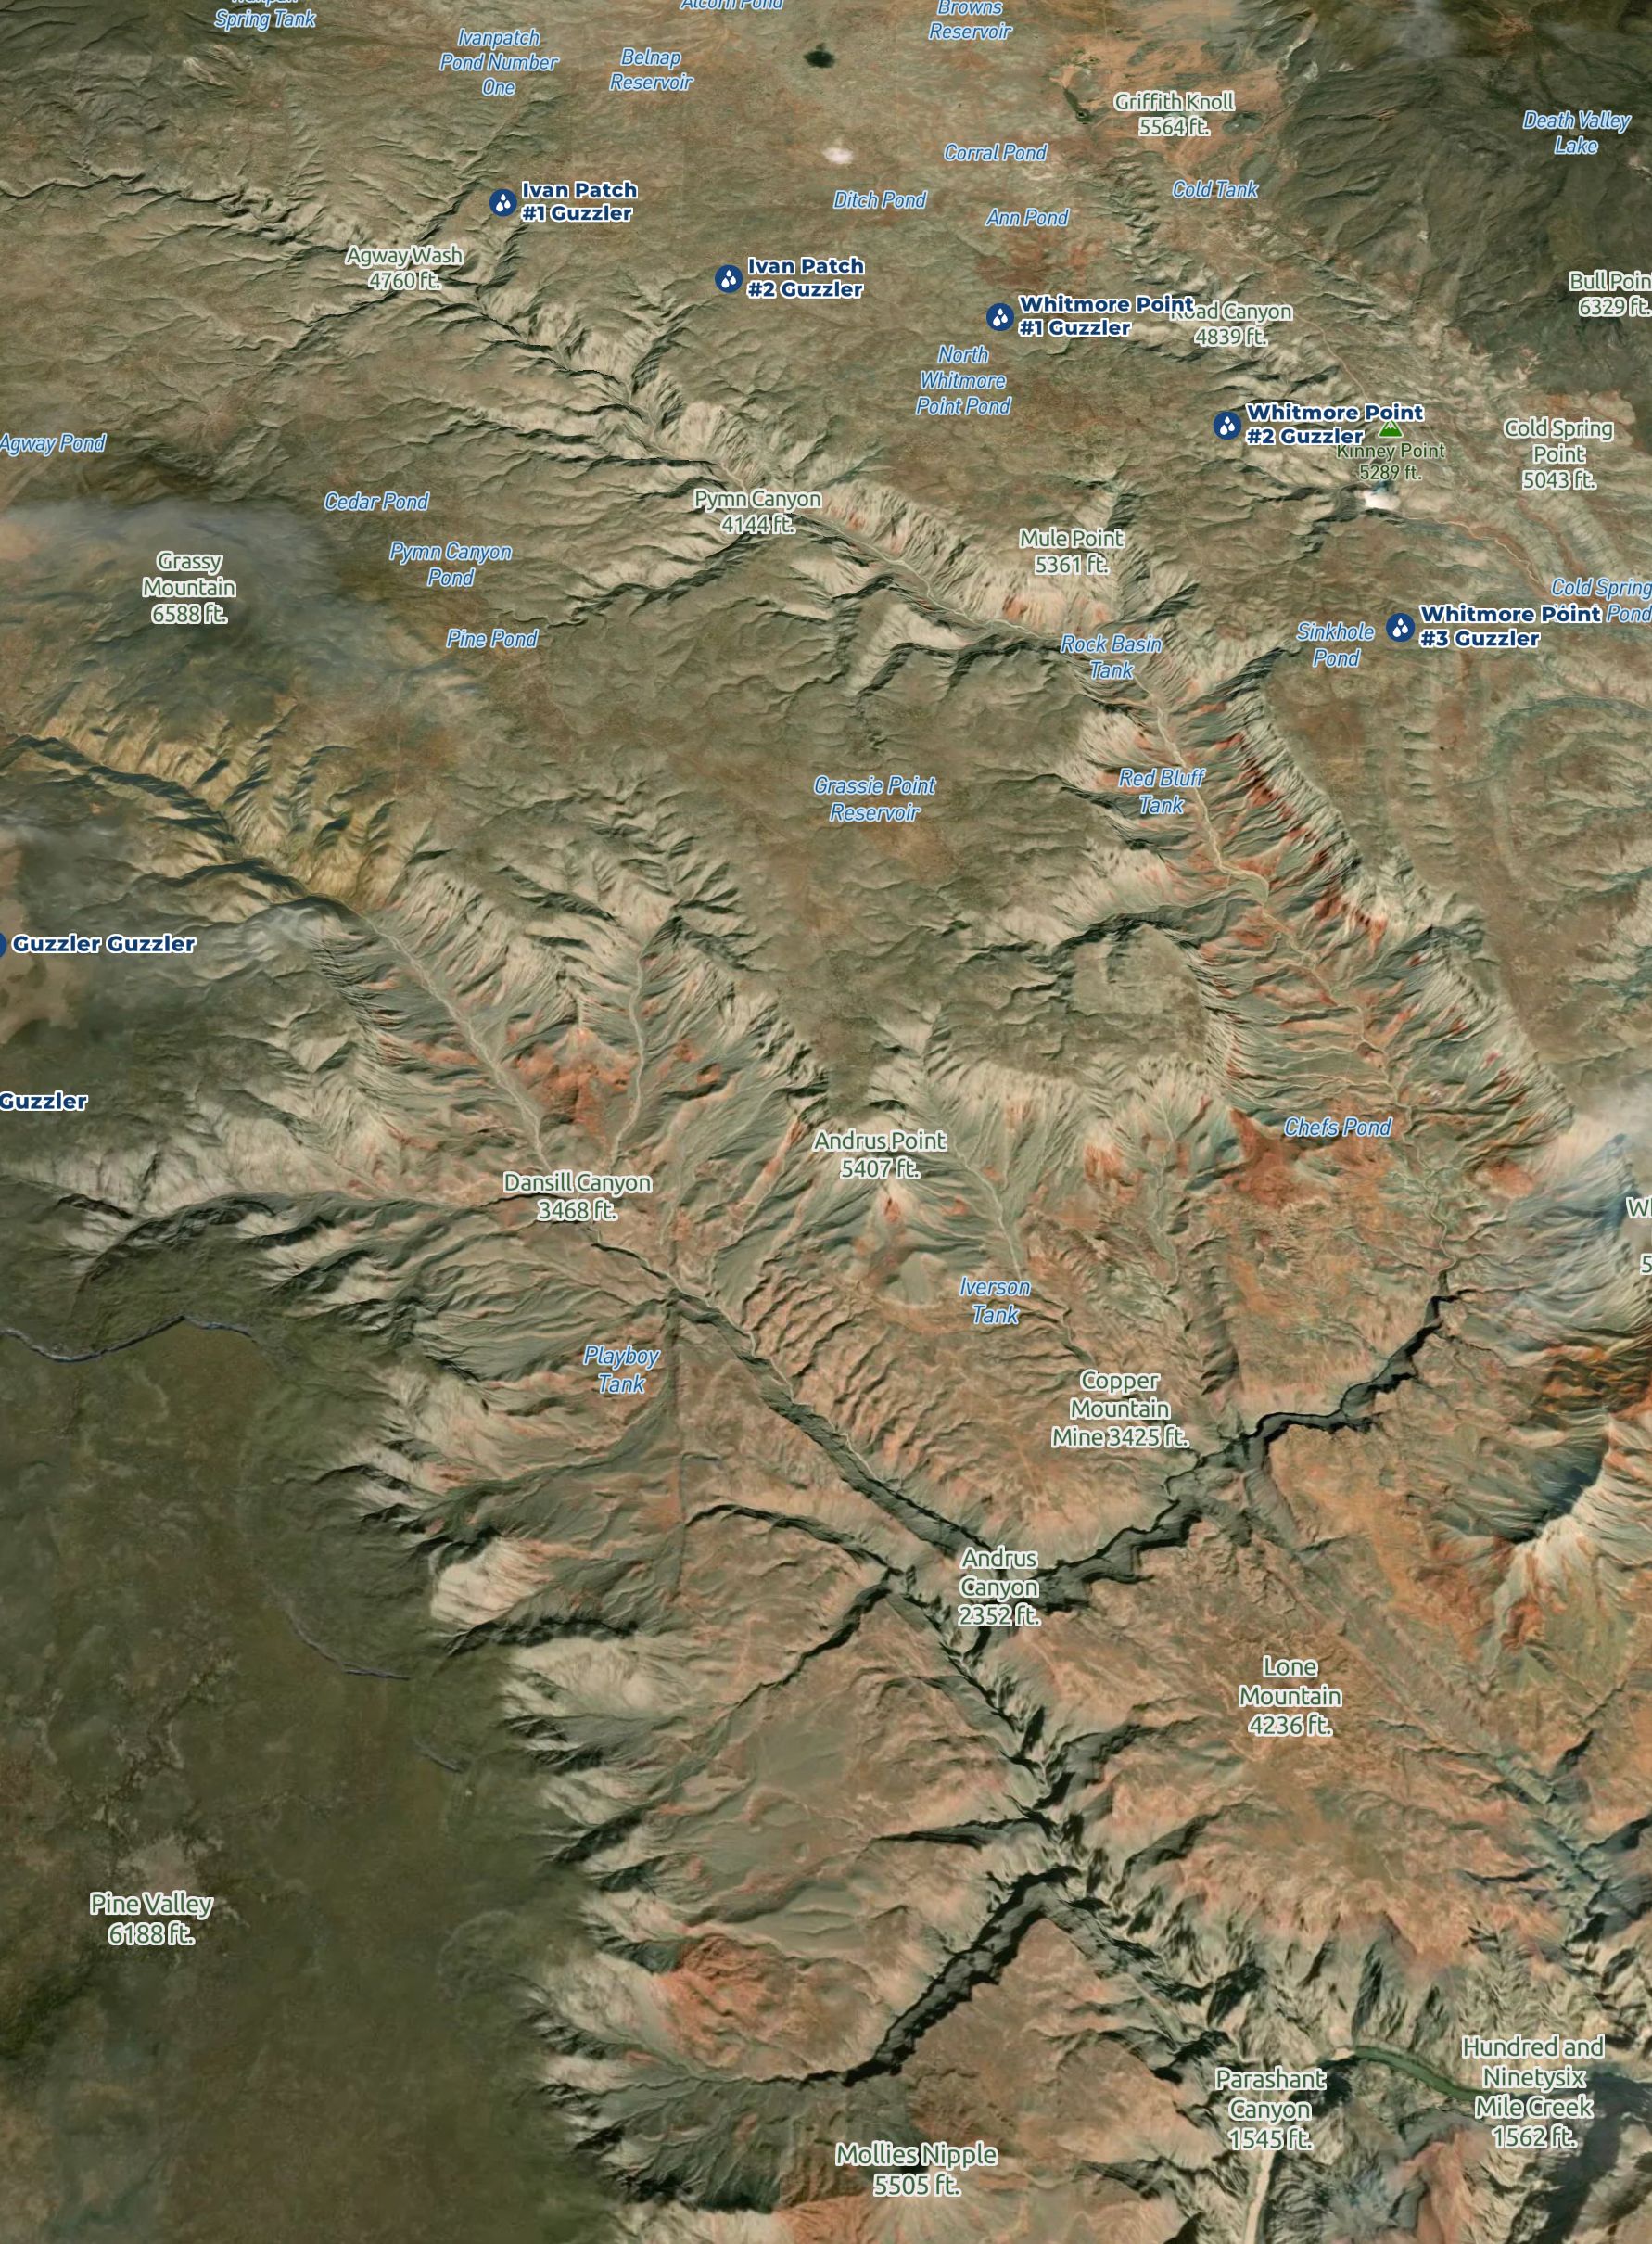 Offline 3D Satellite Map of the Parashant Canyon area, AZ - Scout To Hunt App